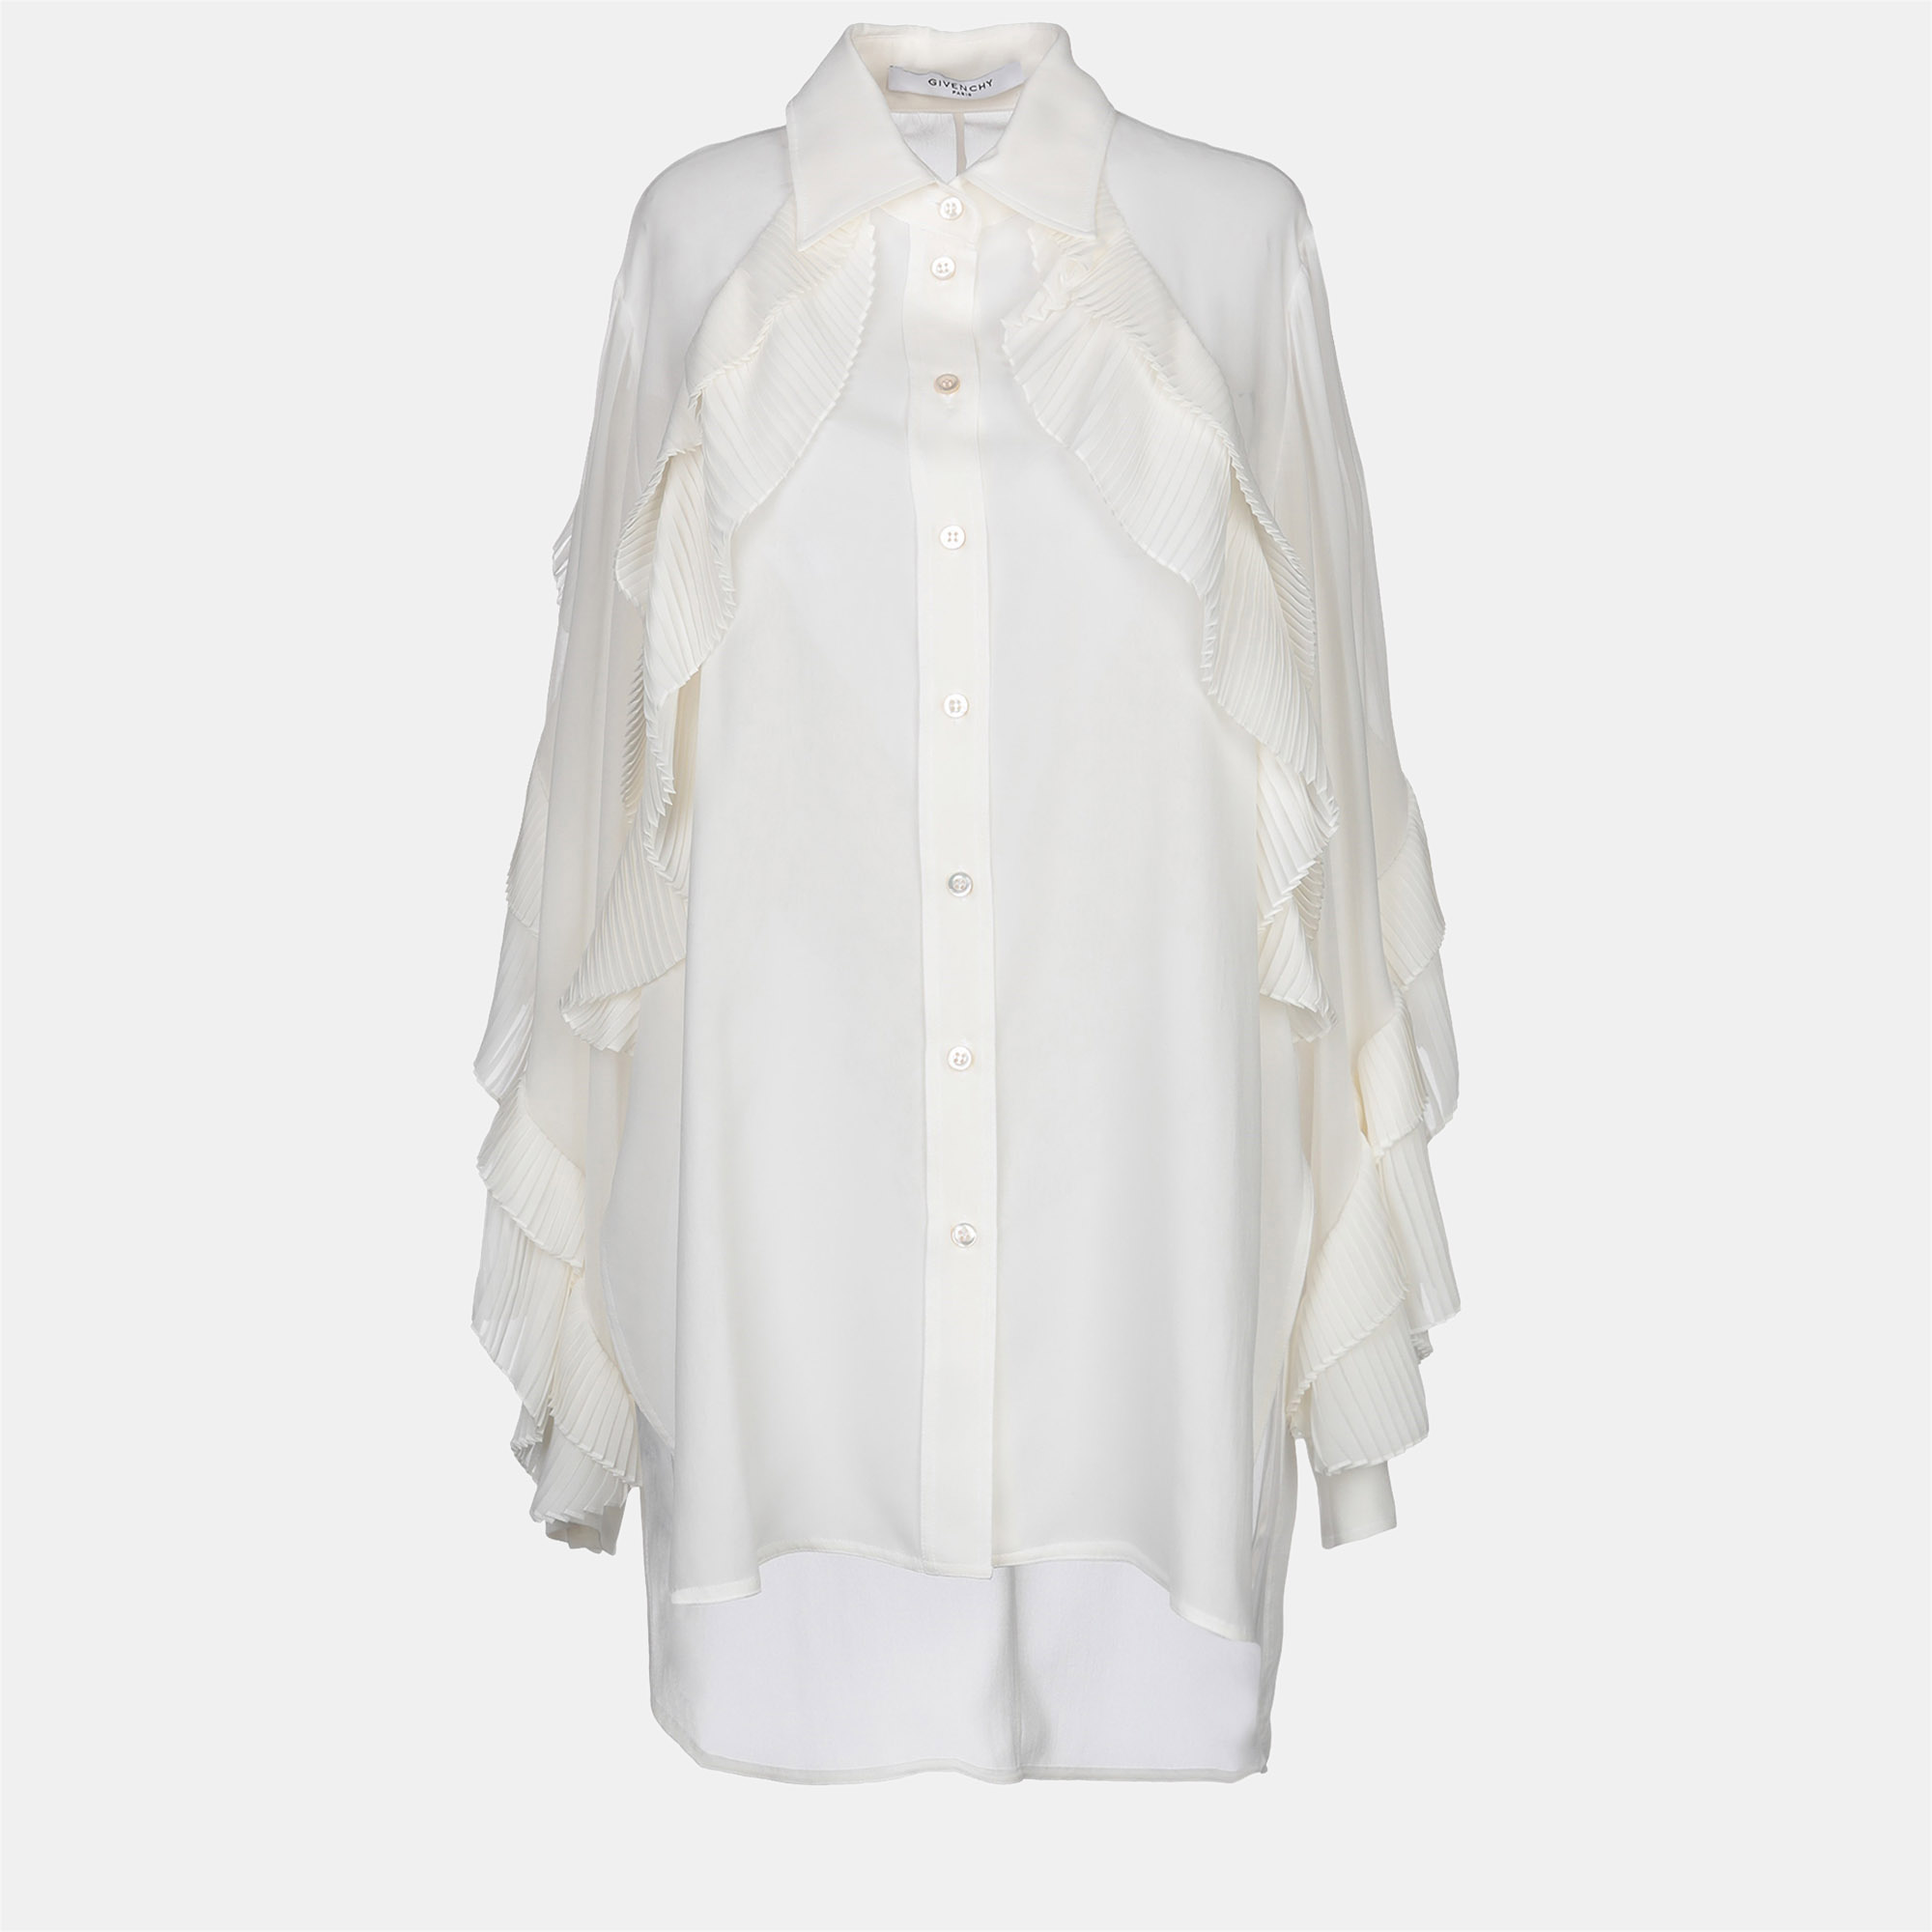 Givenchy silk shirt 40